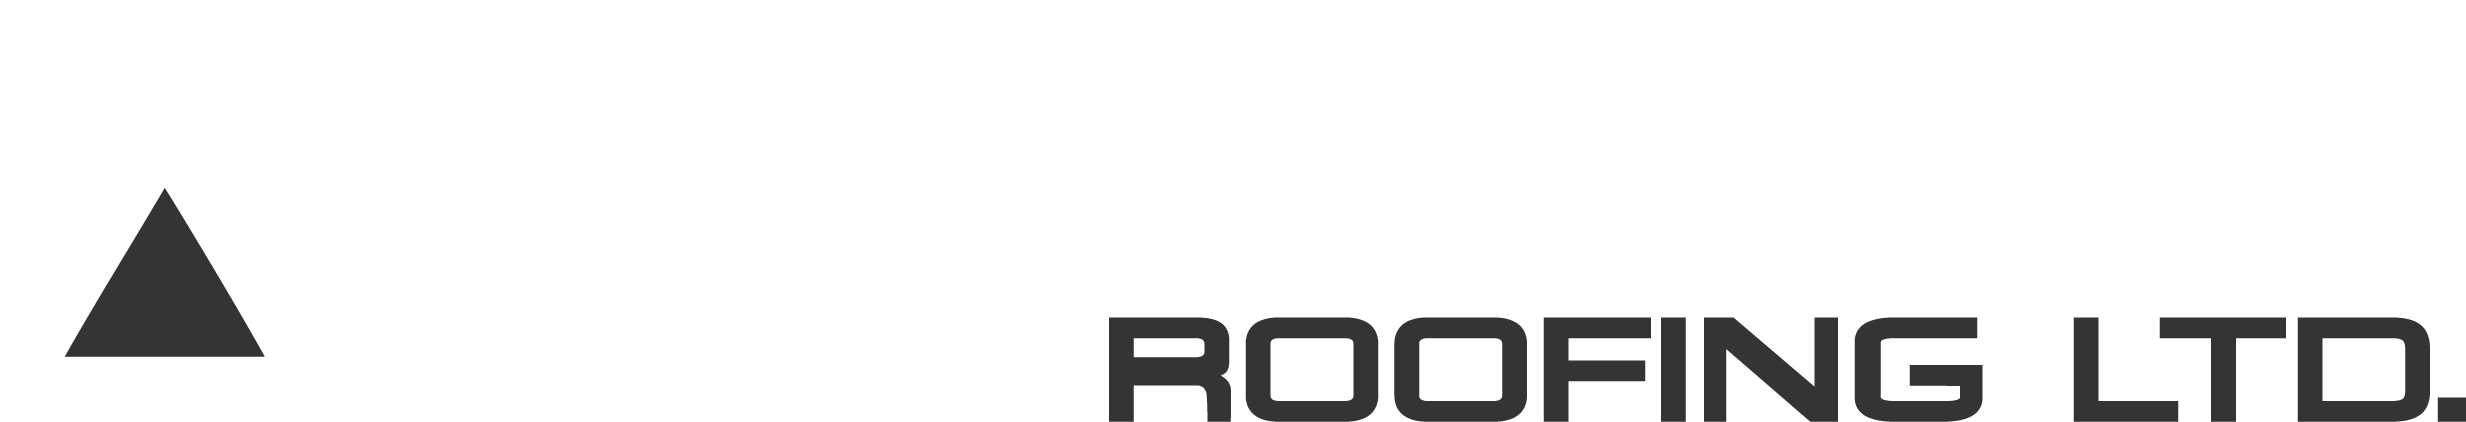 Antonyshyn Roofing Footer Logo